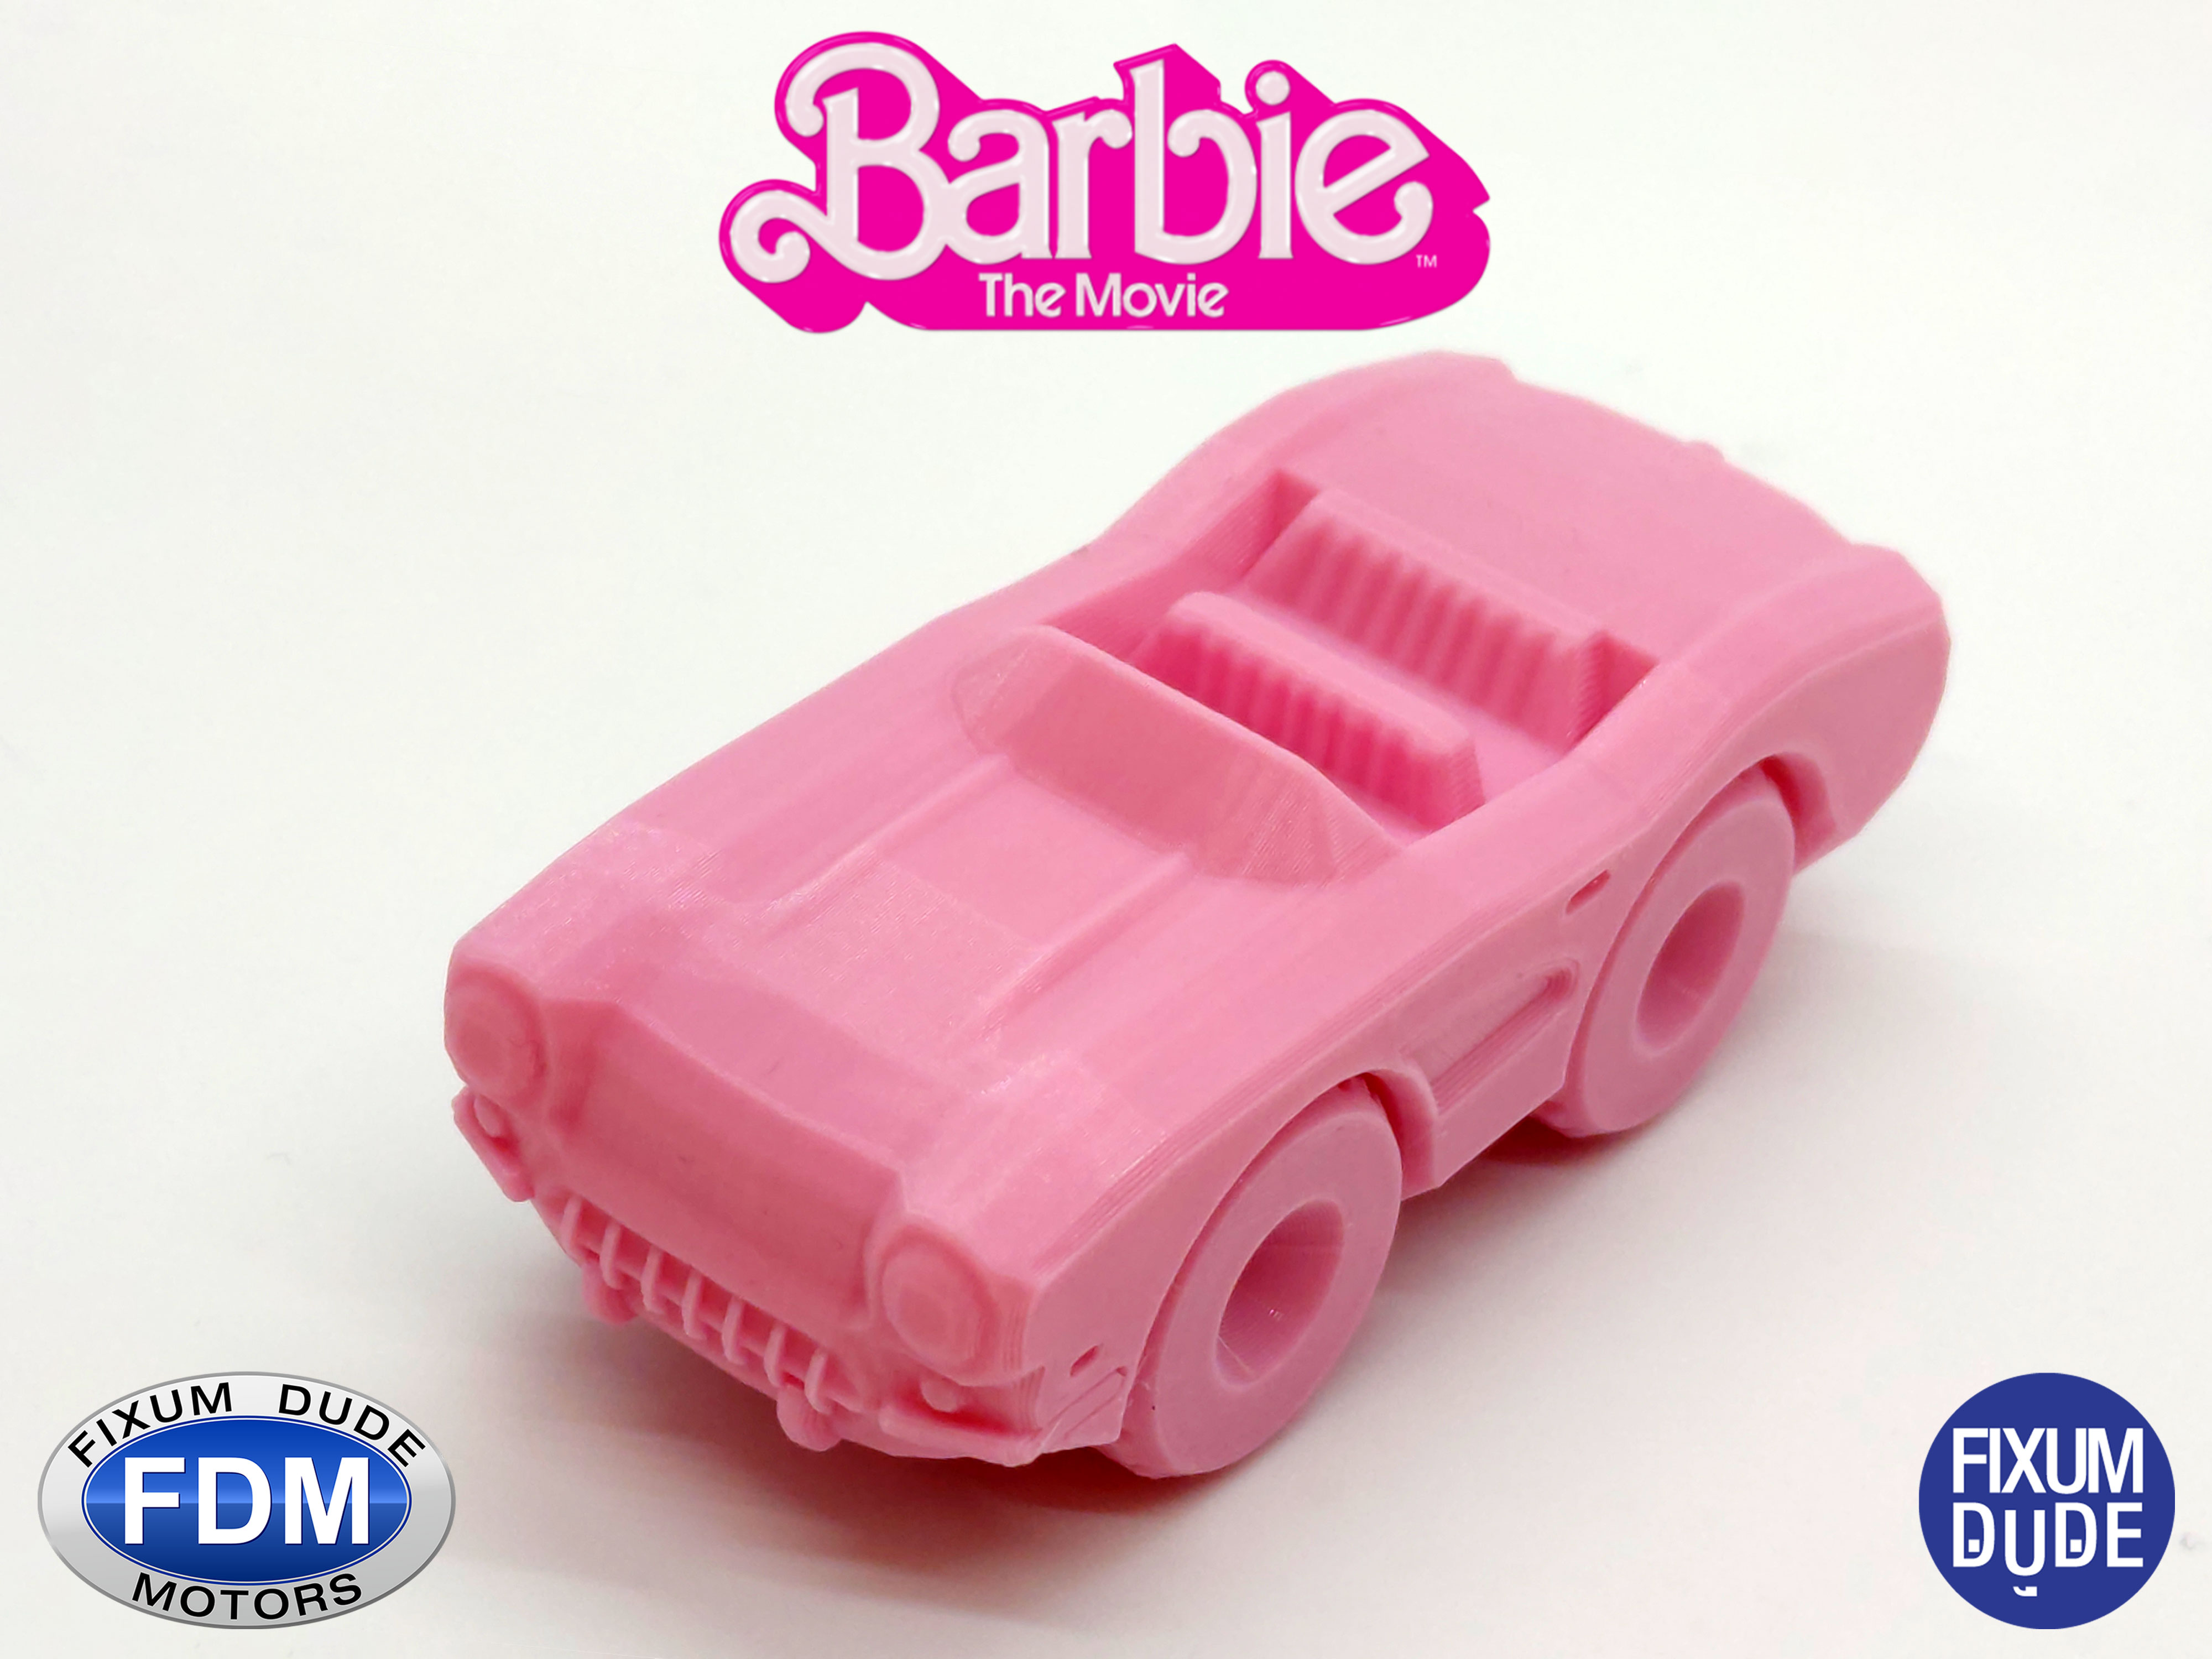 Fixum Dude Motors Barbie Movie Corvette by fixumdude | Printables 